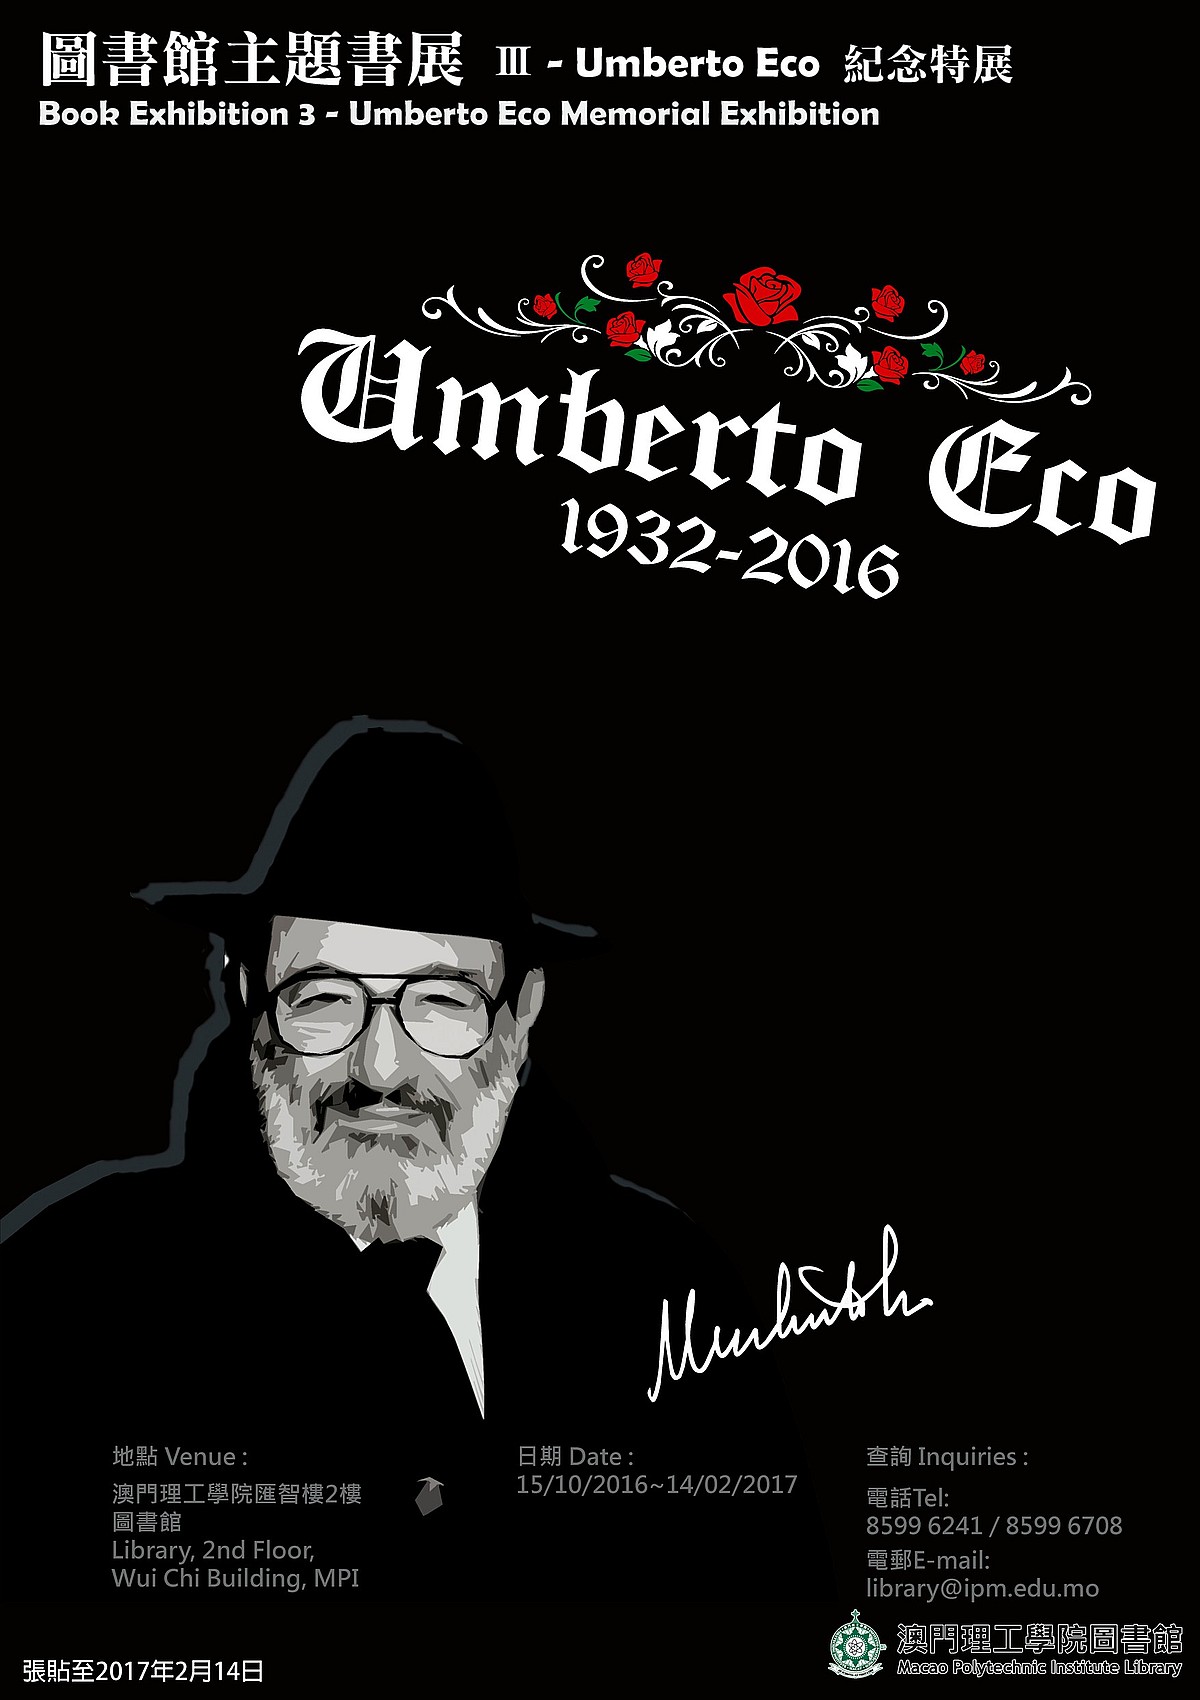 Umberto Eco Memorial Exhibition